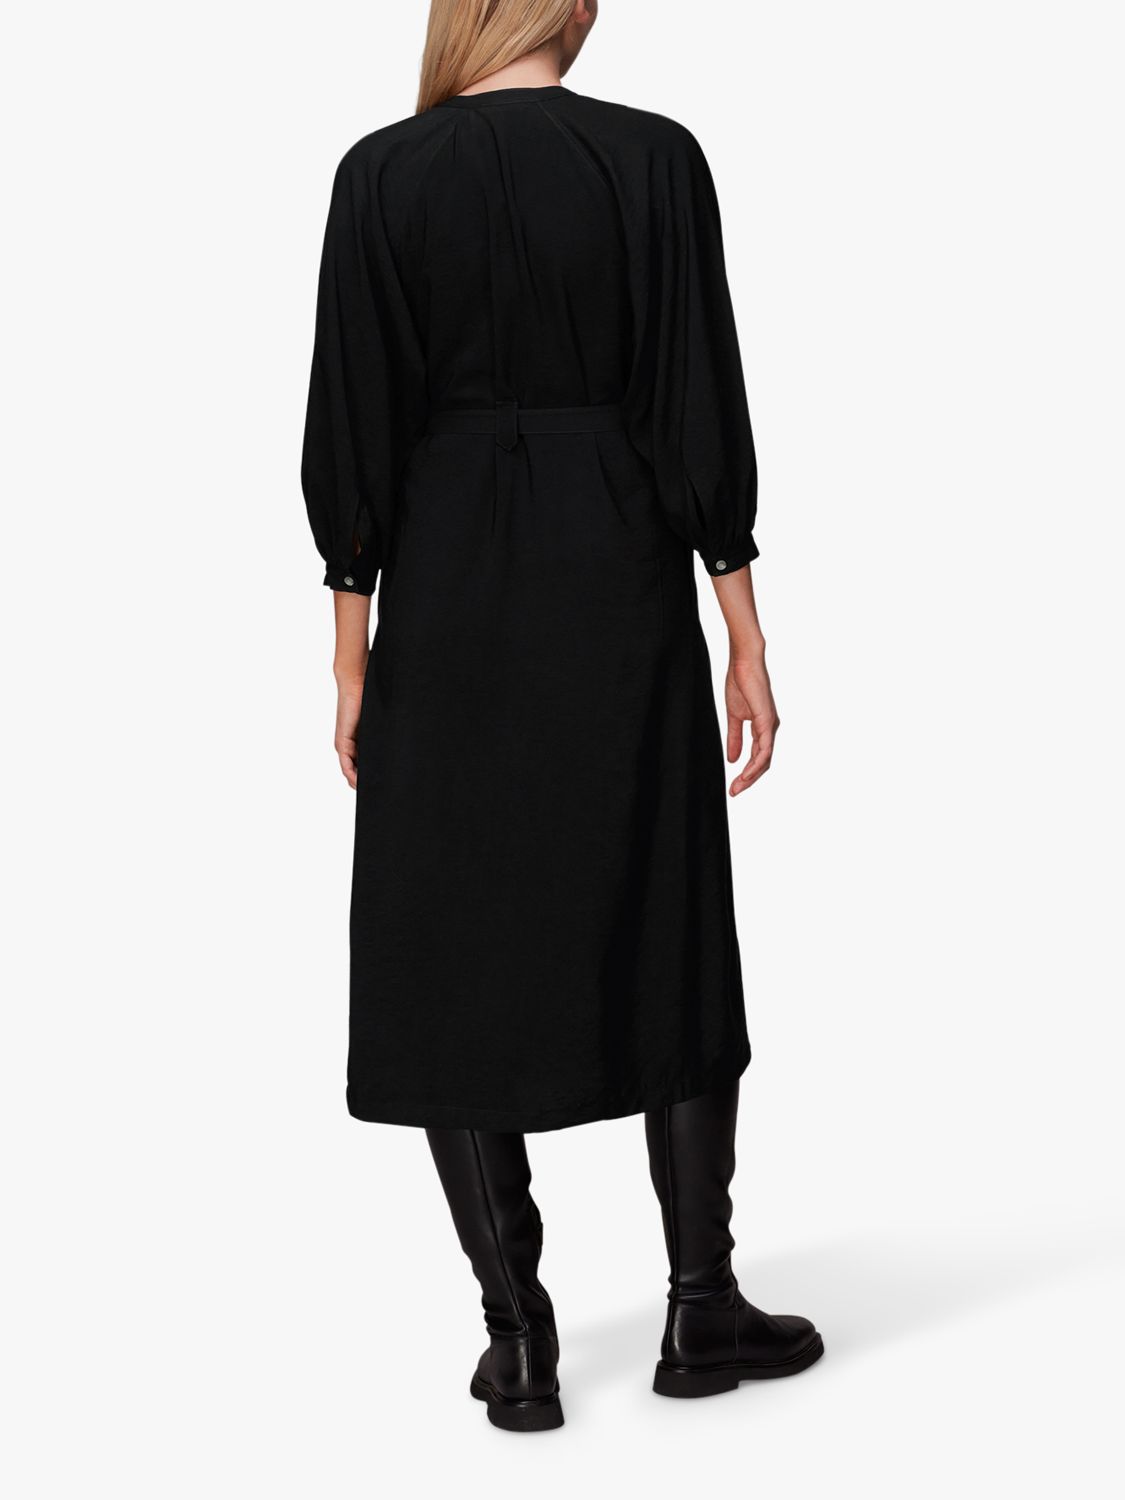 Whistles Lizzie Midi Dress, Black at John Lewis & Partners